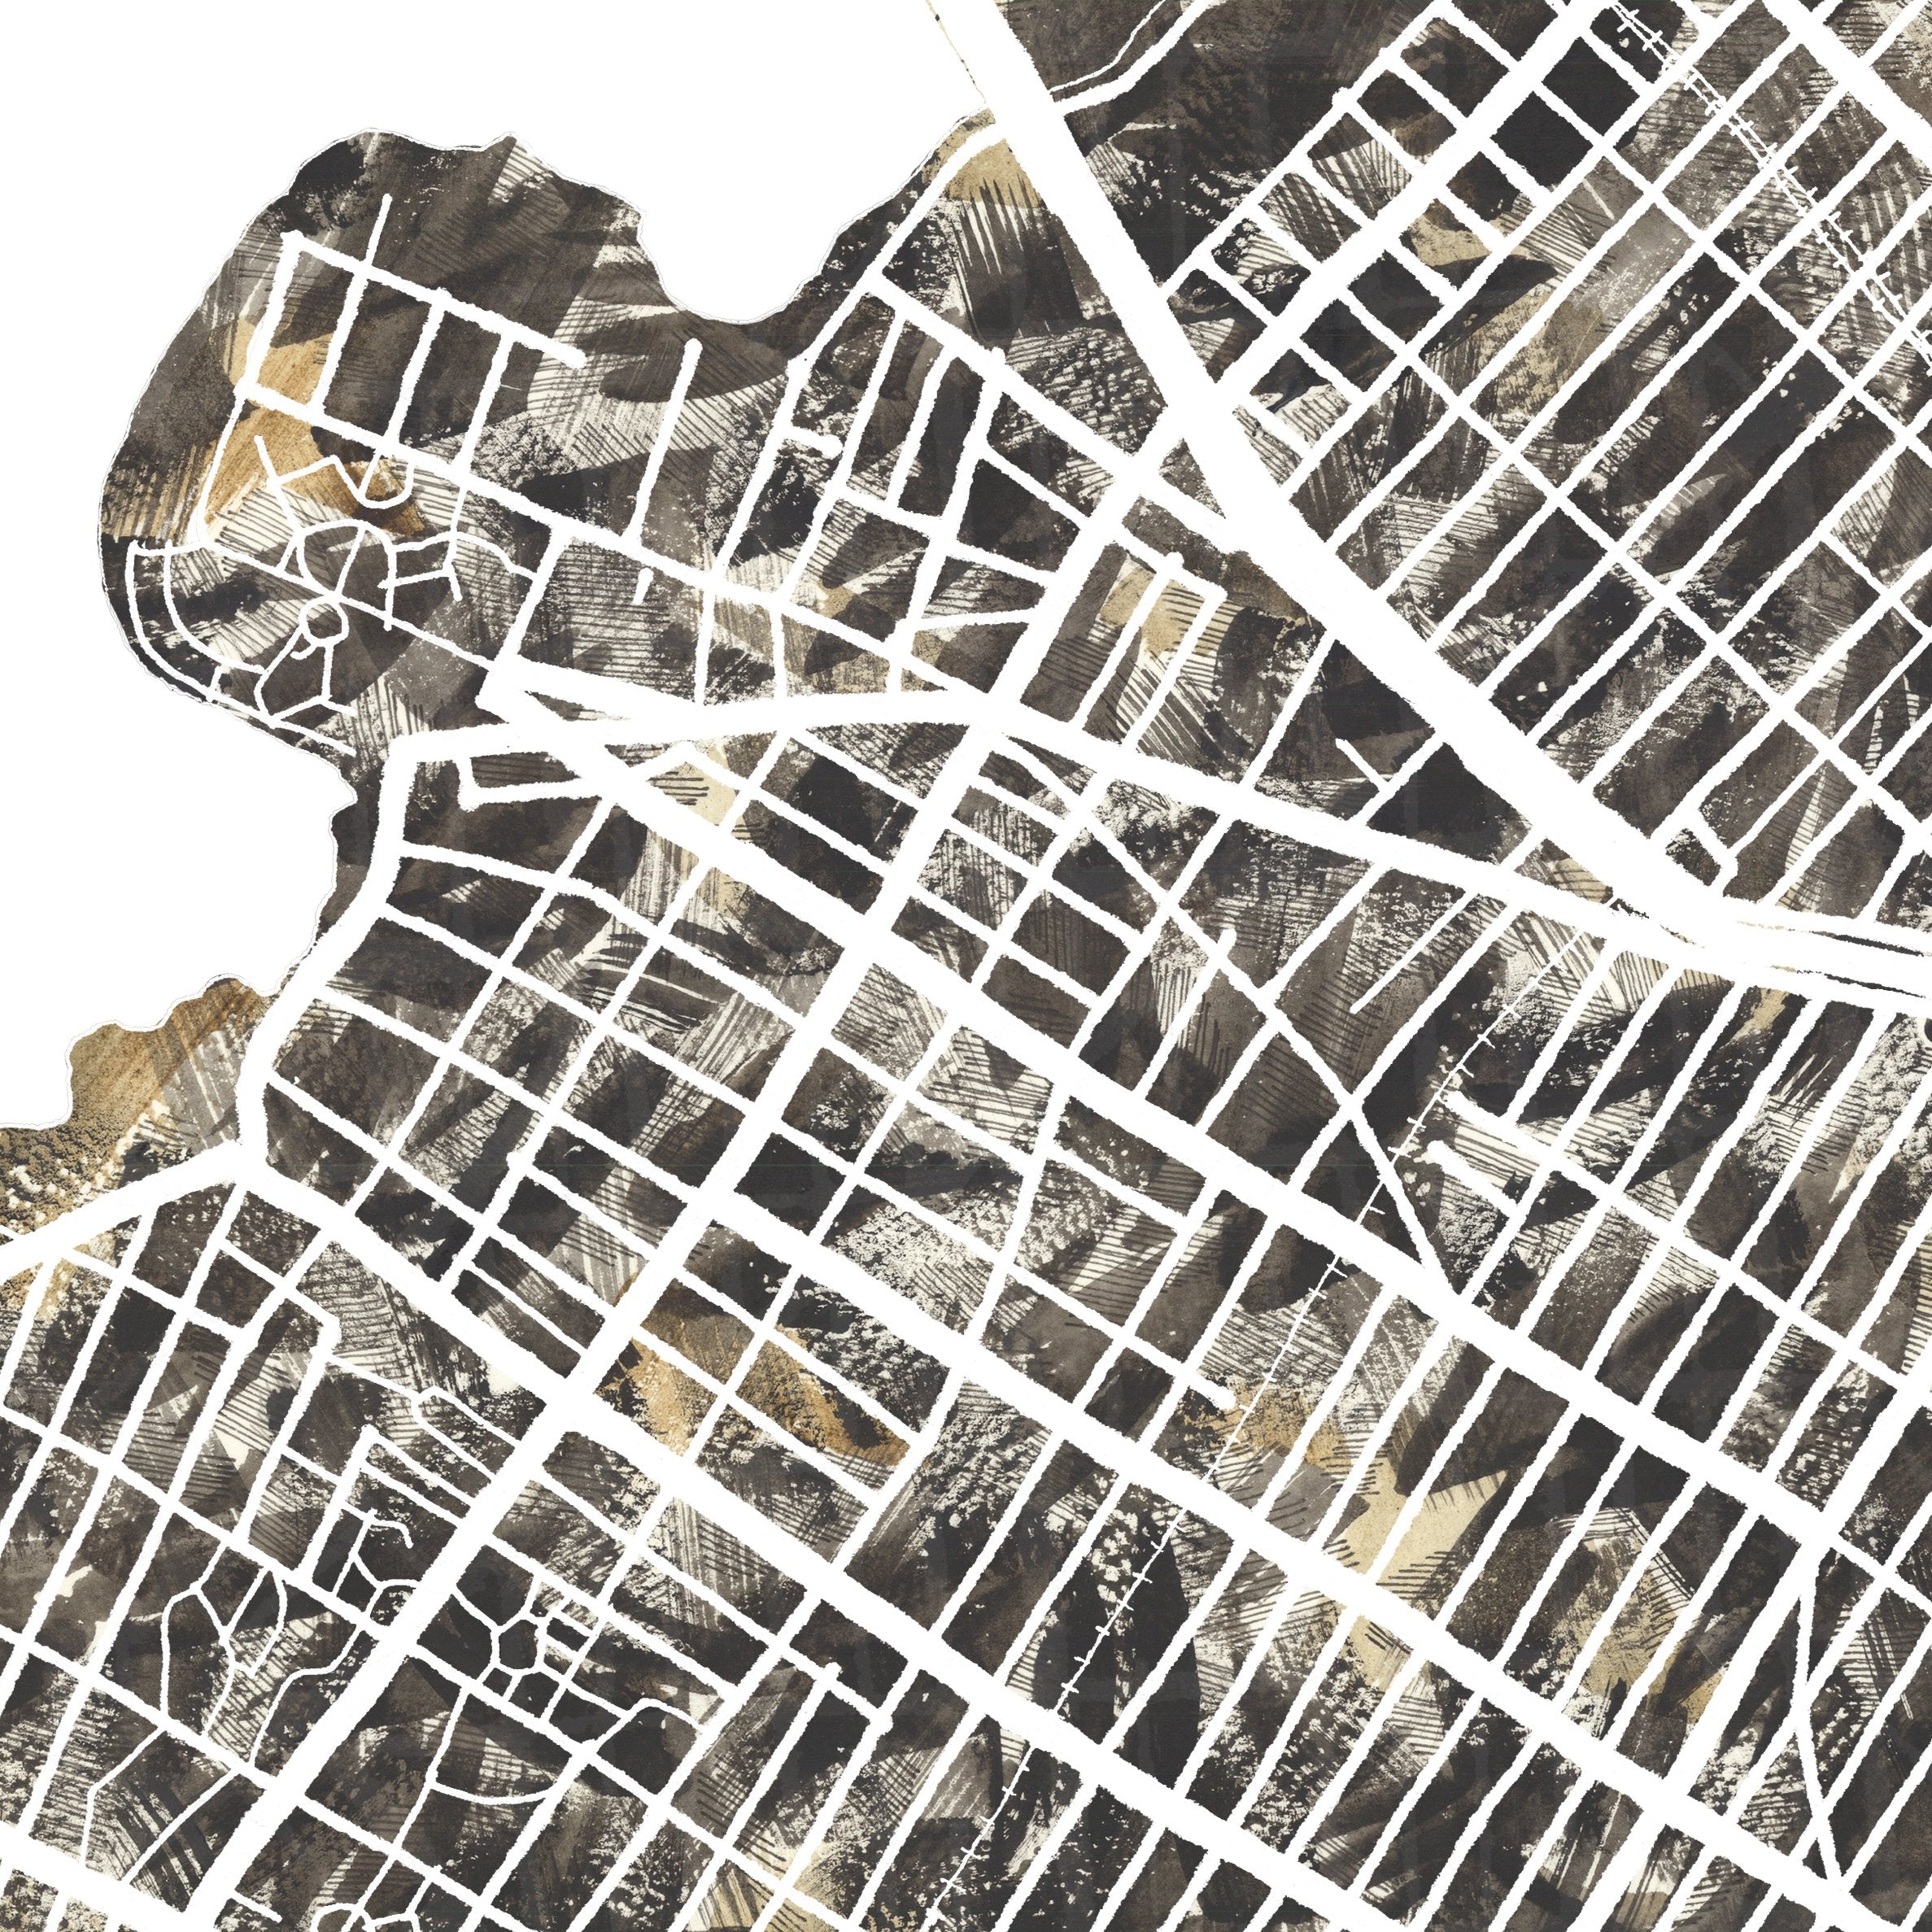 ASTORIA Queens Urban Fabrics City Map: PRINT